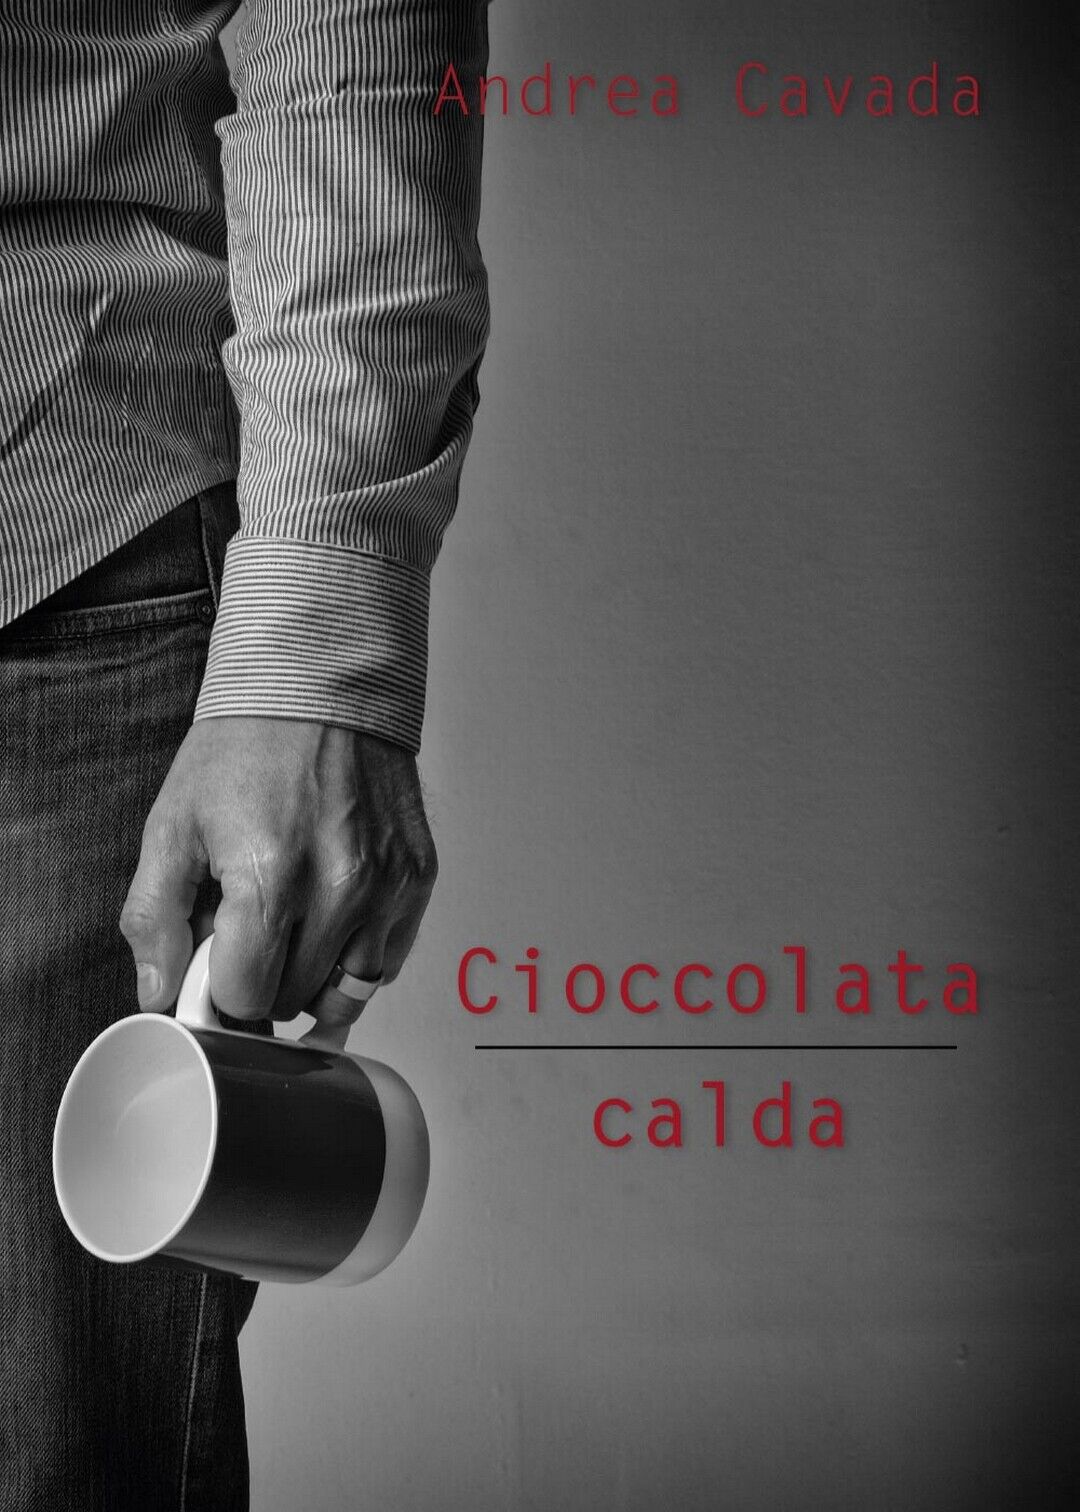 Cioccolata calda  di Andrea Cavada,  2017,  Youcanprint libro usato